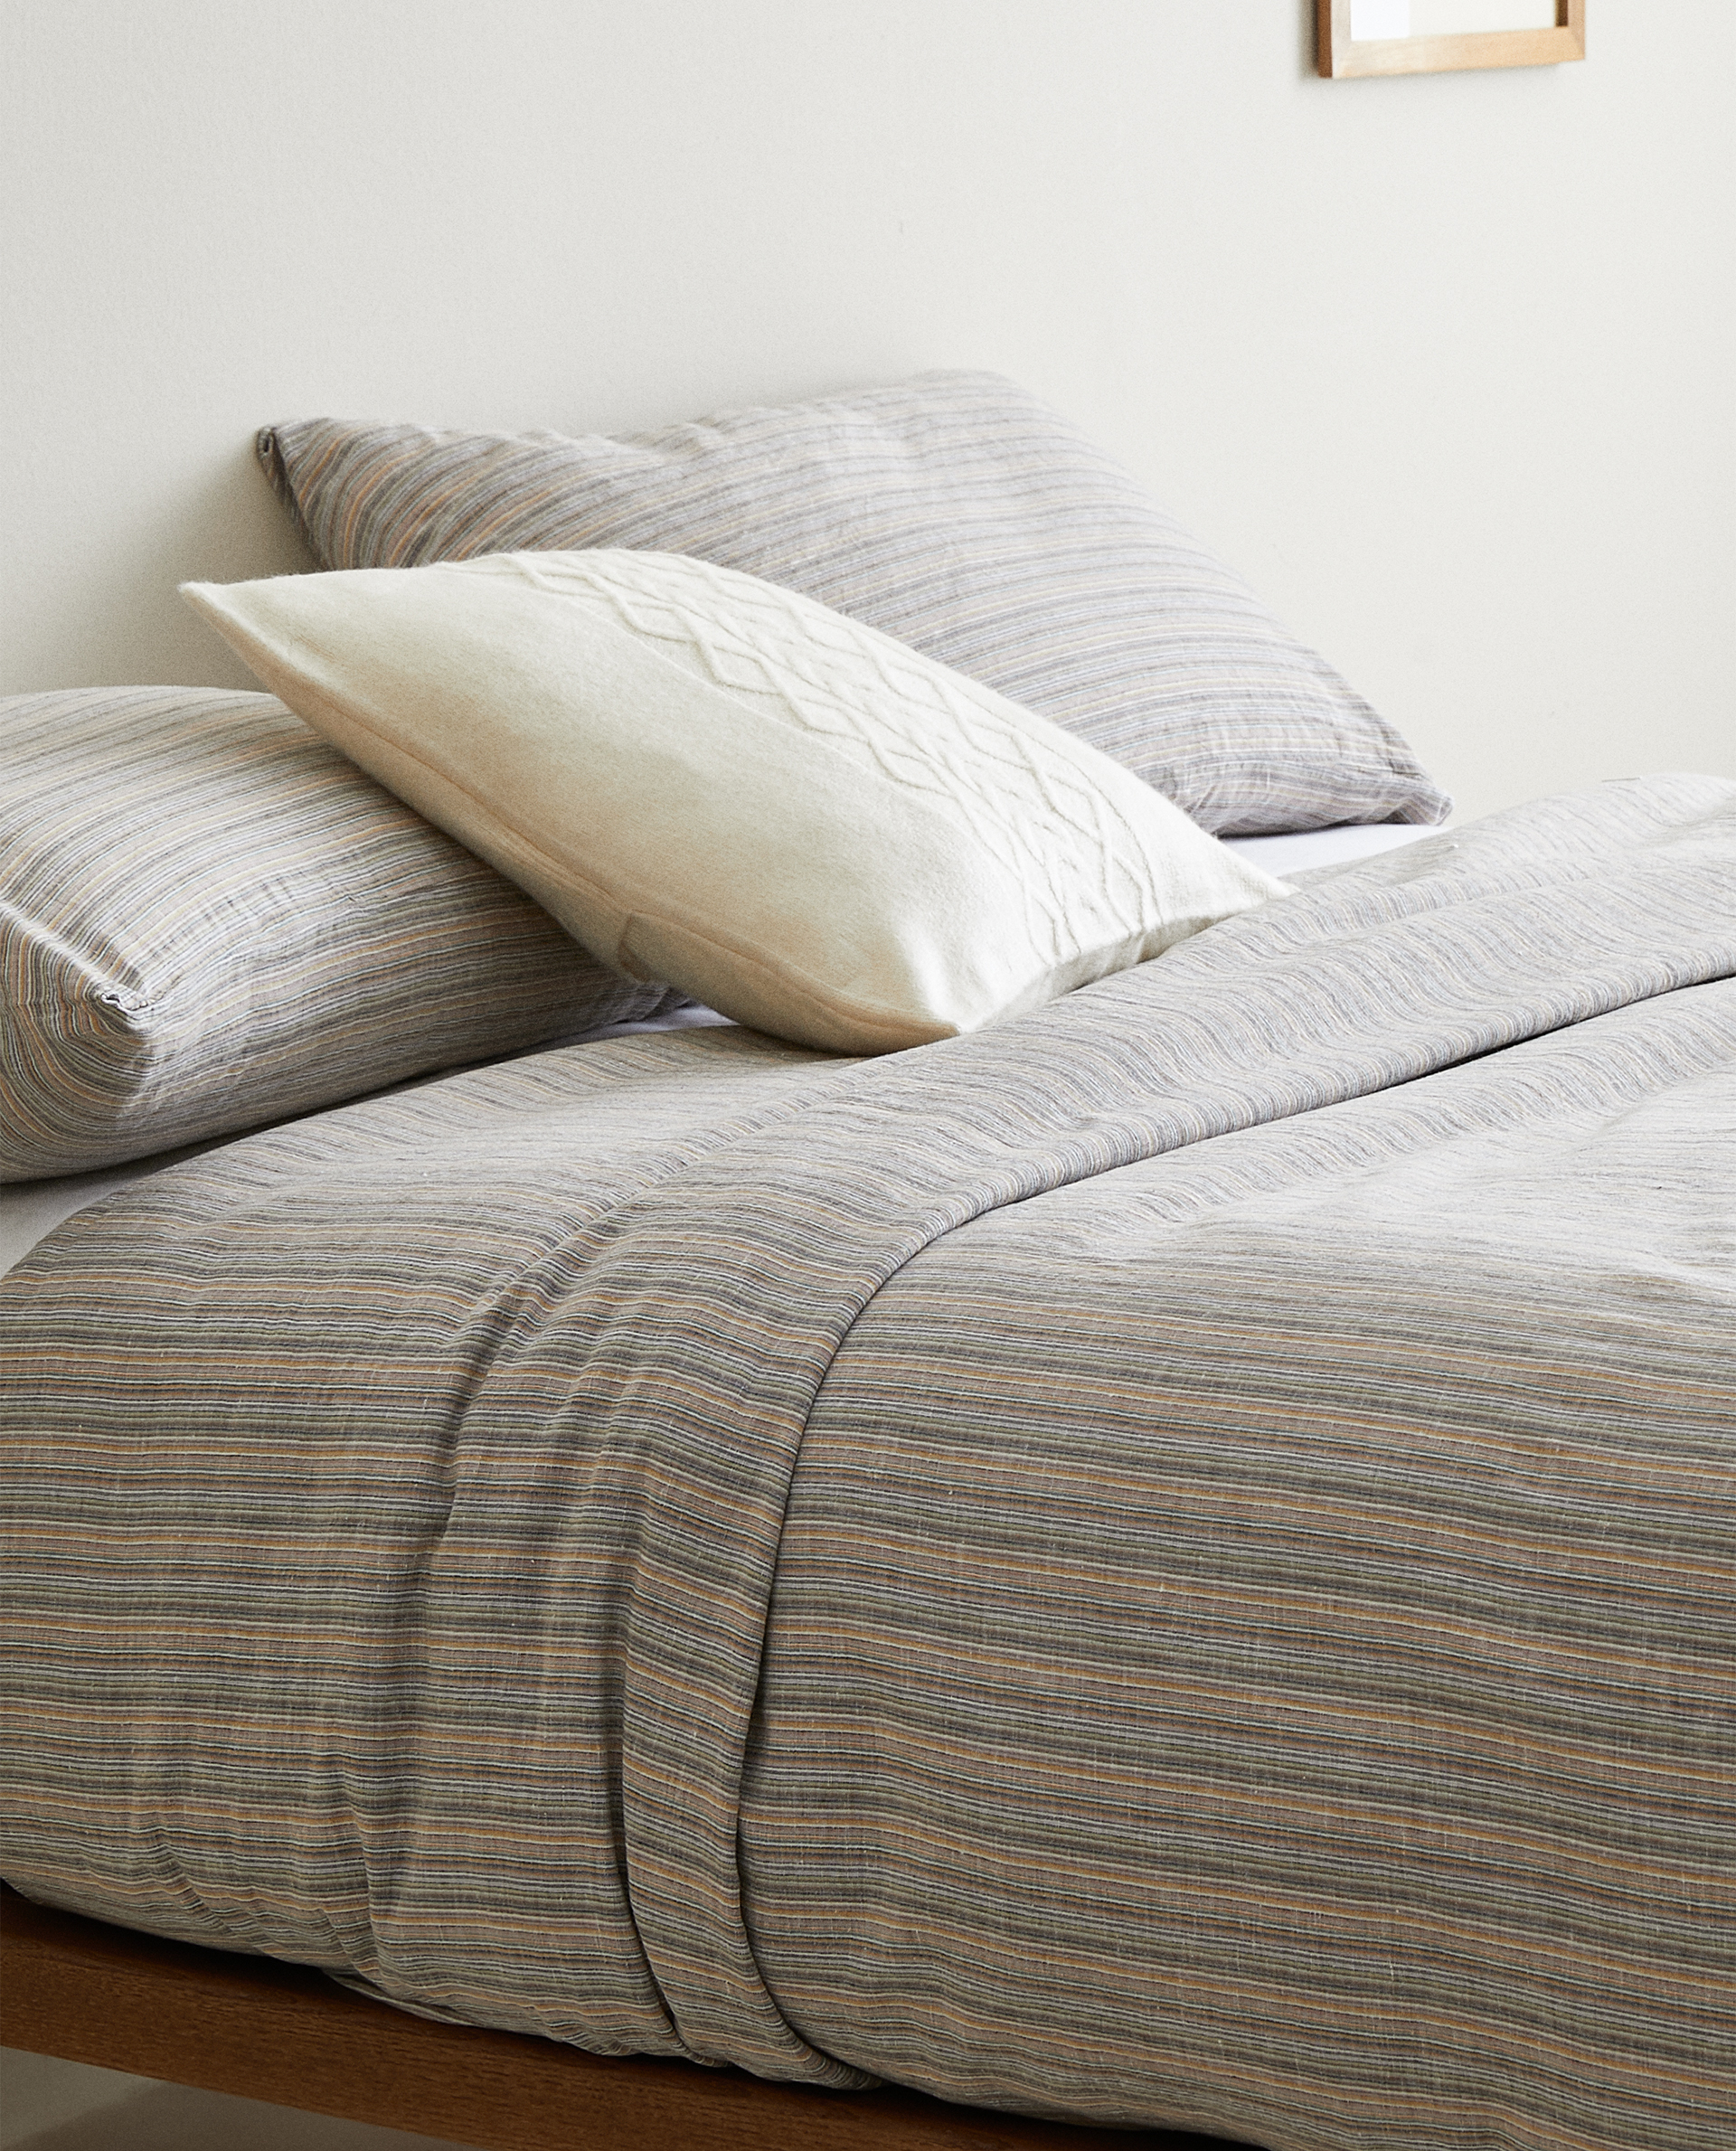 Duvet Cover With Multicoloured Stripes Duvet Covers Bed Linen